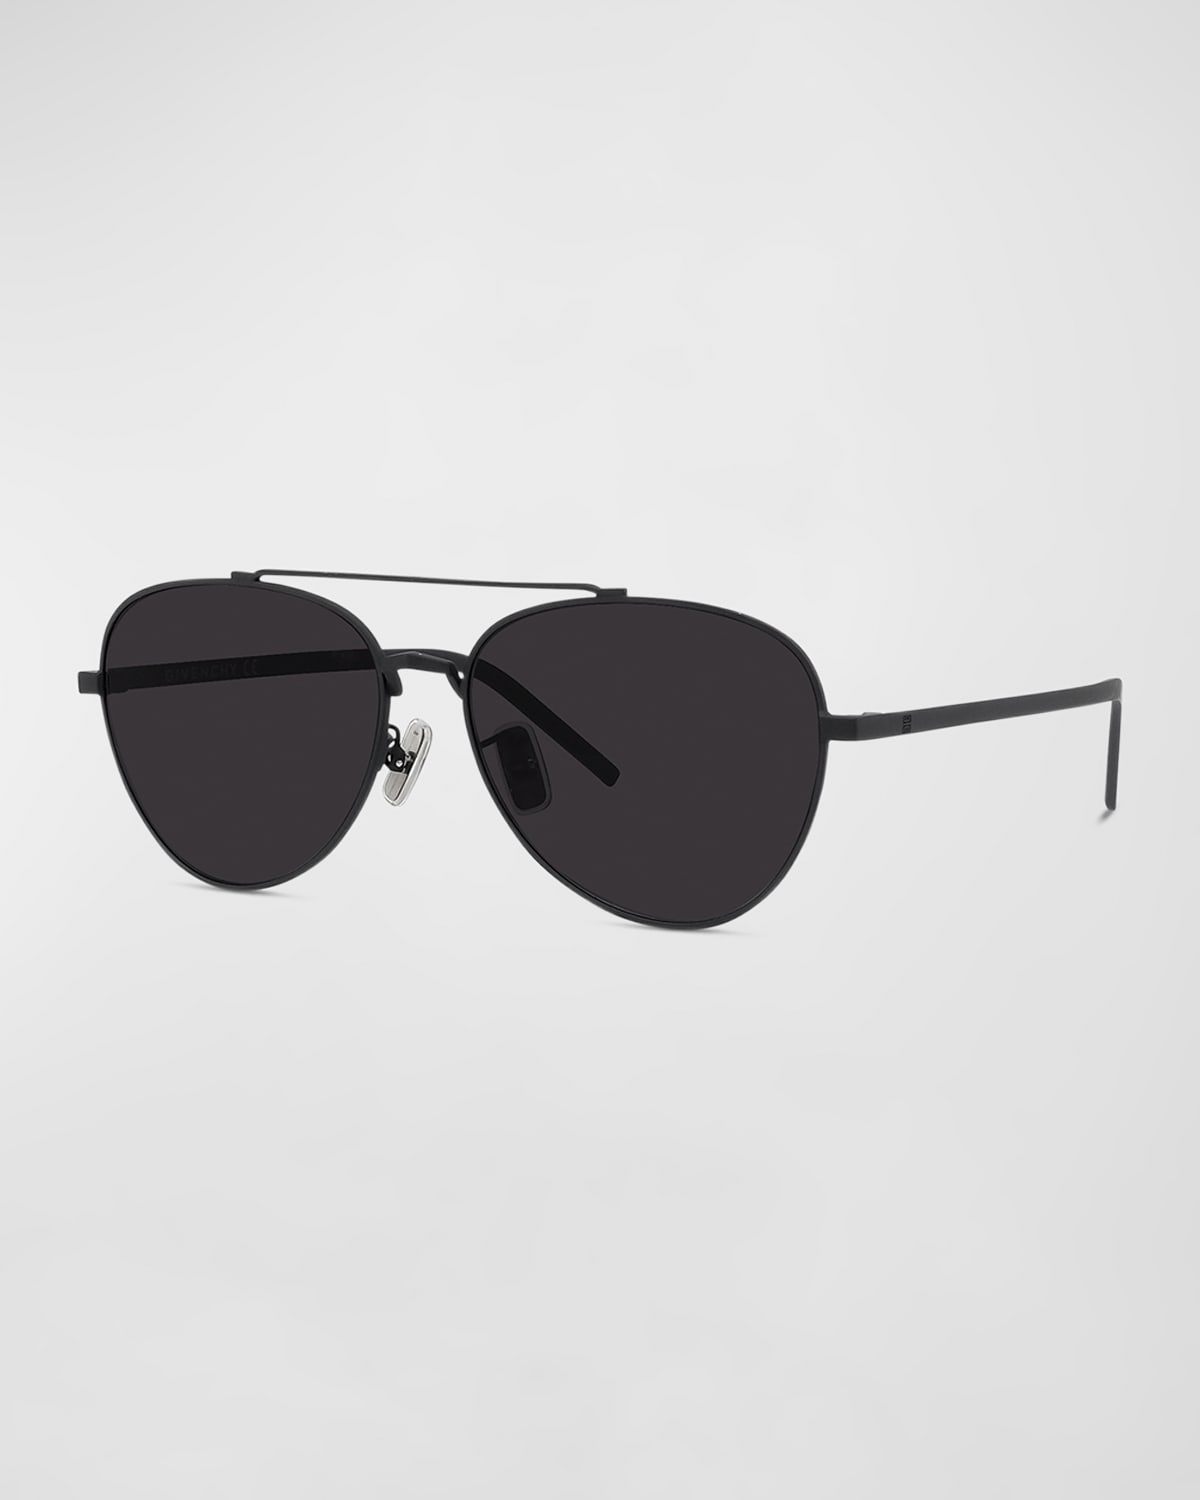 Givenchy Sunglasses | Neiman Marcus